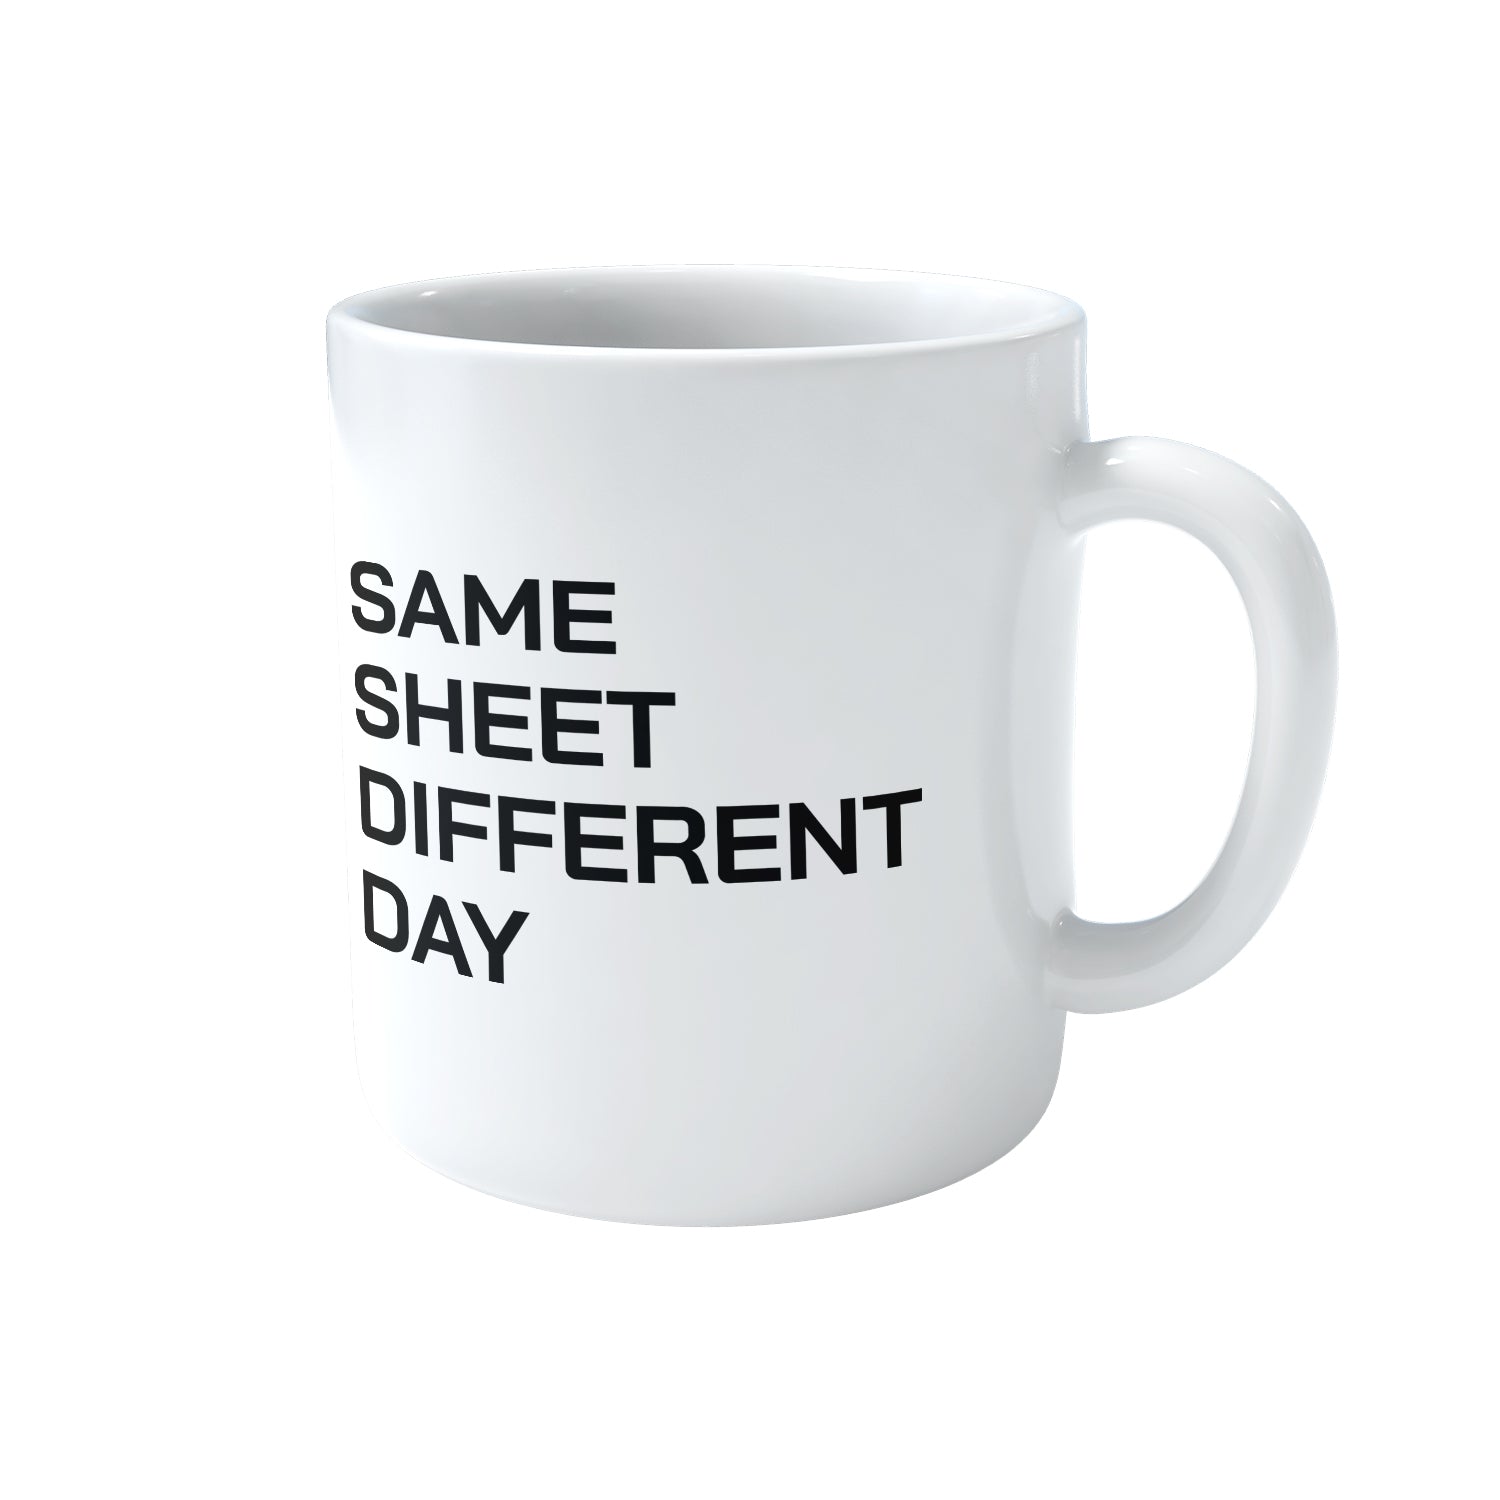 Same Sheet Different Day Mug